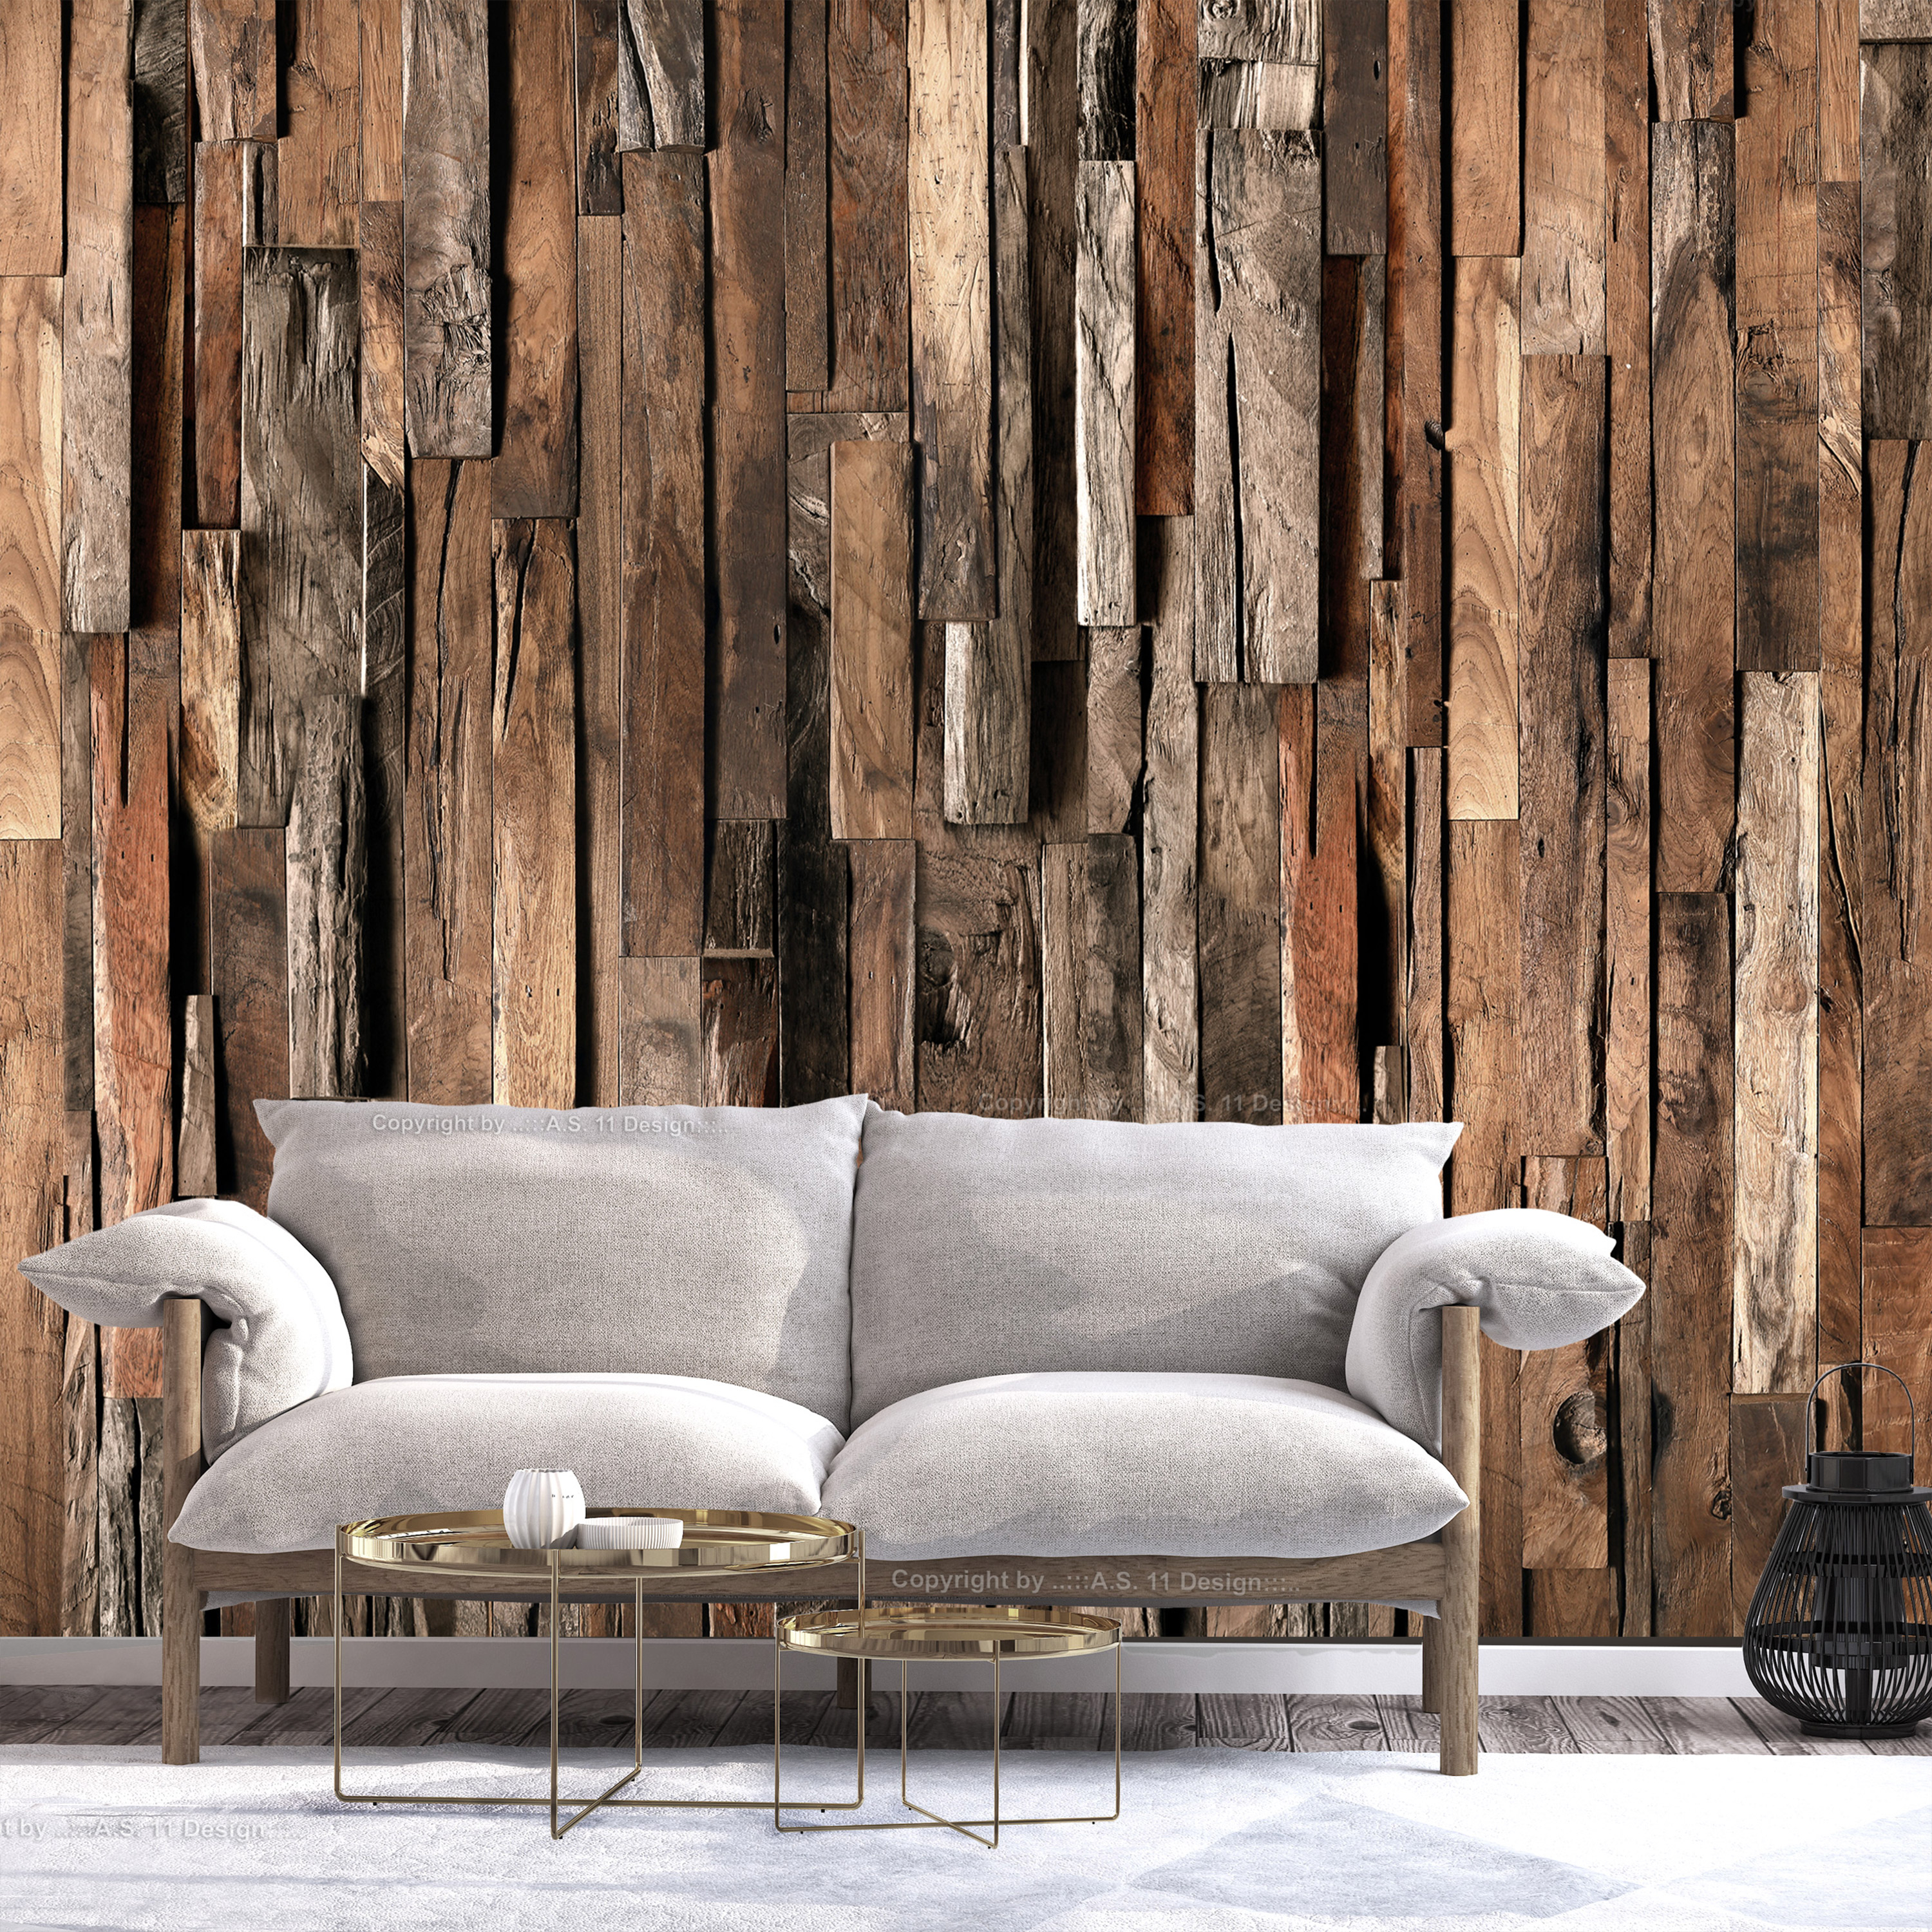 Self-adhesive Wallpaper - Wooden Curtain (Brown) - 98x70